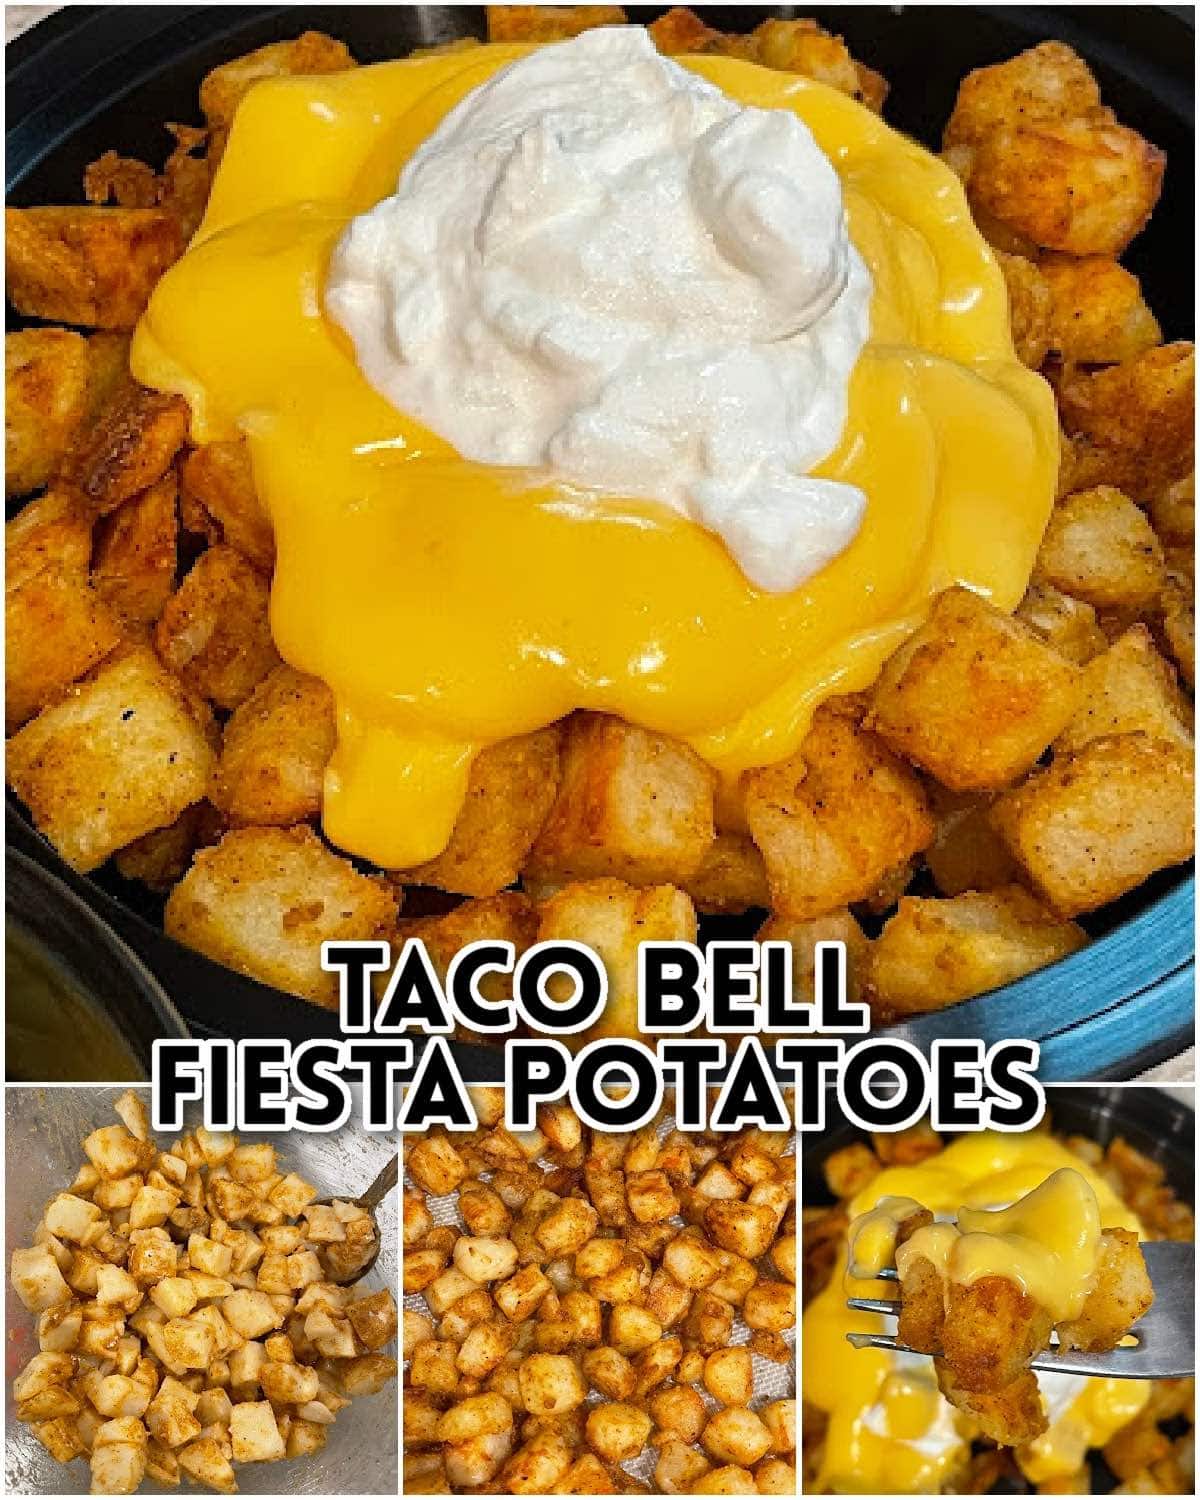 taco bell fiesta potatoes fb image.